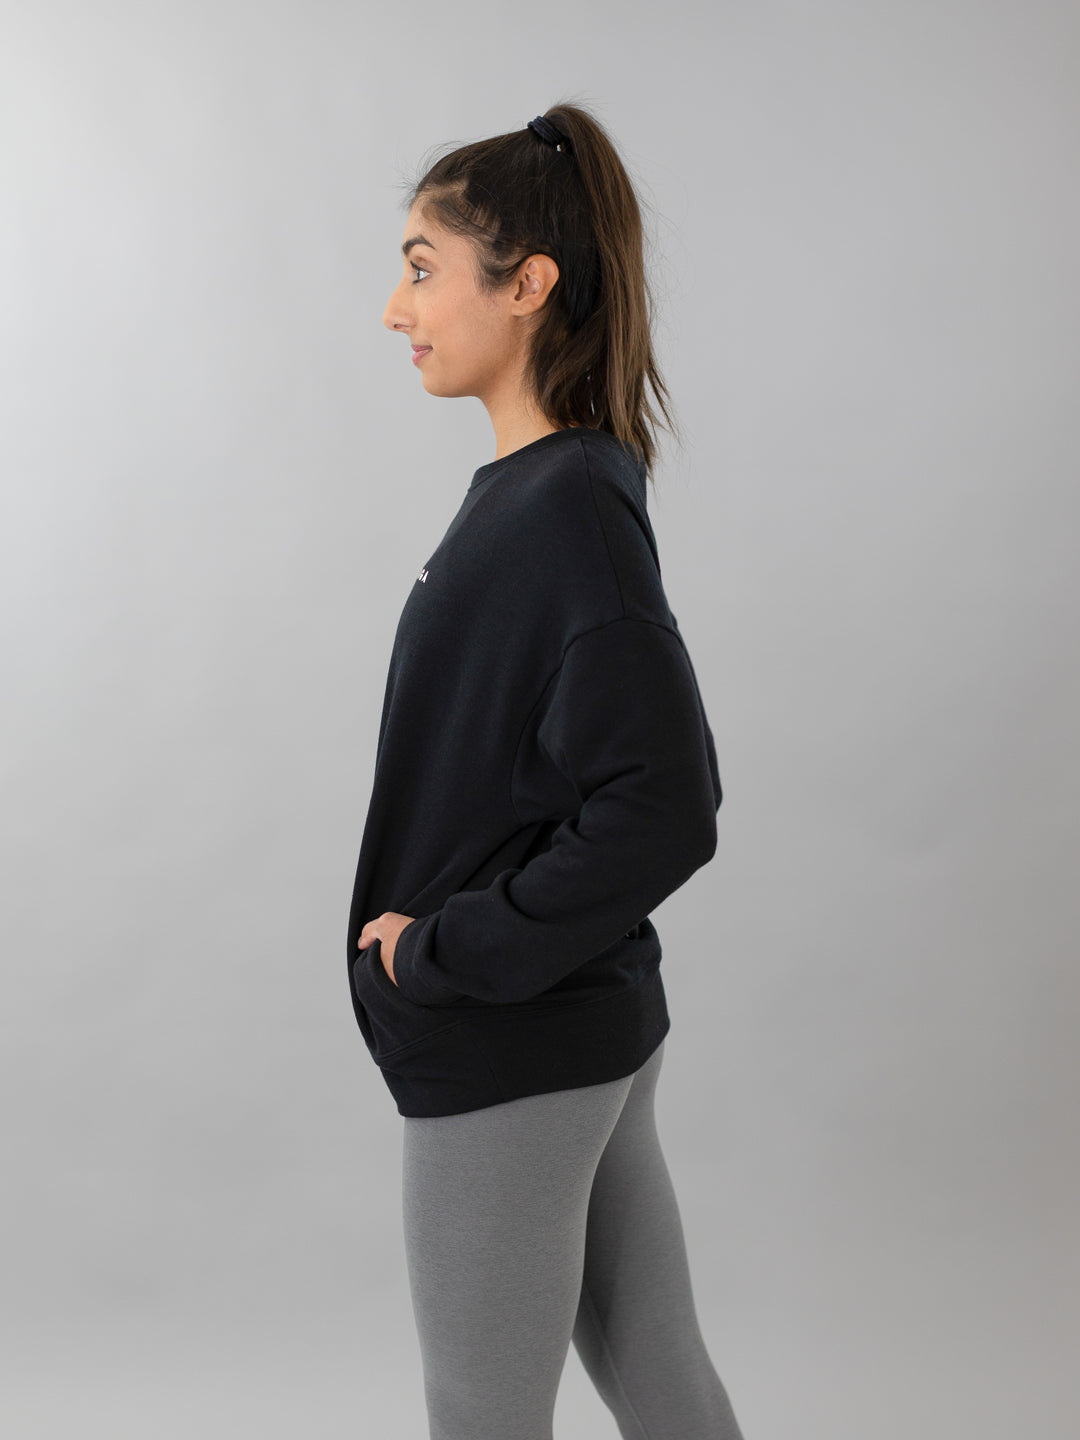 CorePower Yoga Black Sweatshirt